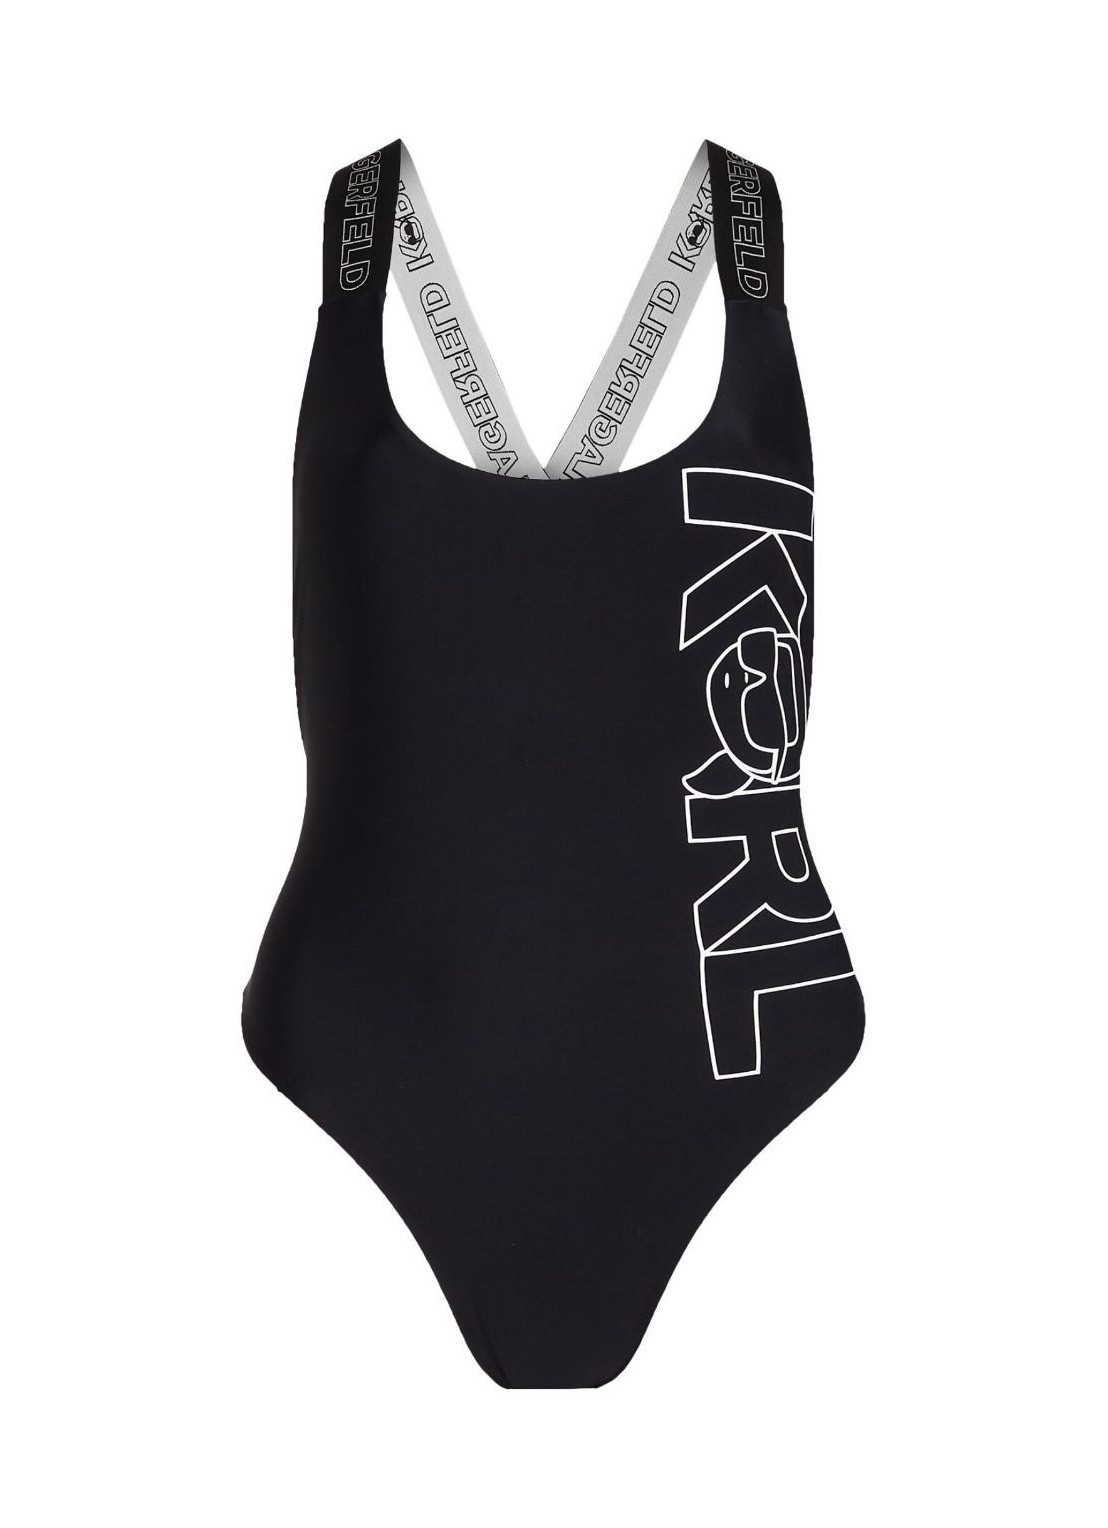 BaA'ador karl lagerfeld swimsuit woman ikonik 2.0 swimsuit w/ elastic 235w2228 999 talla S
 